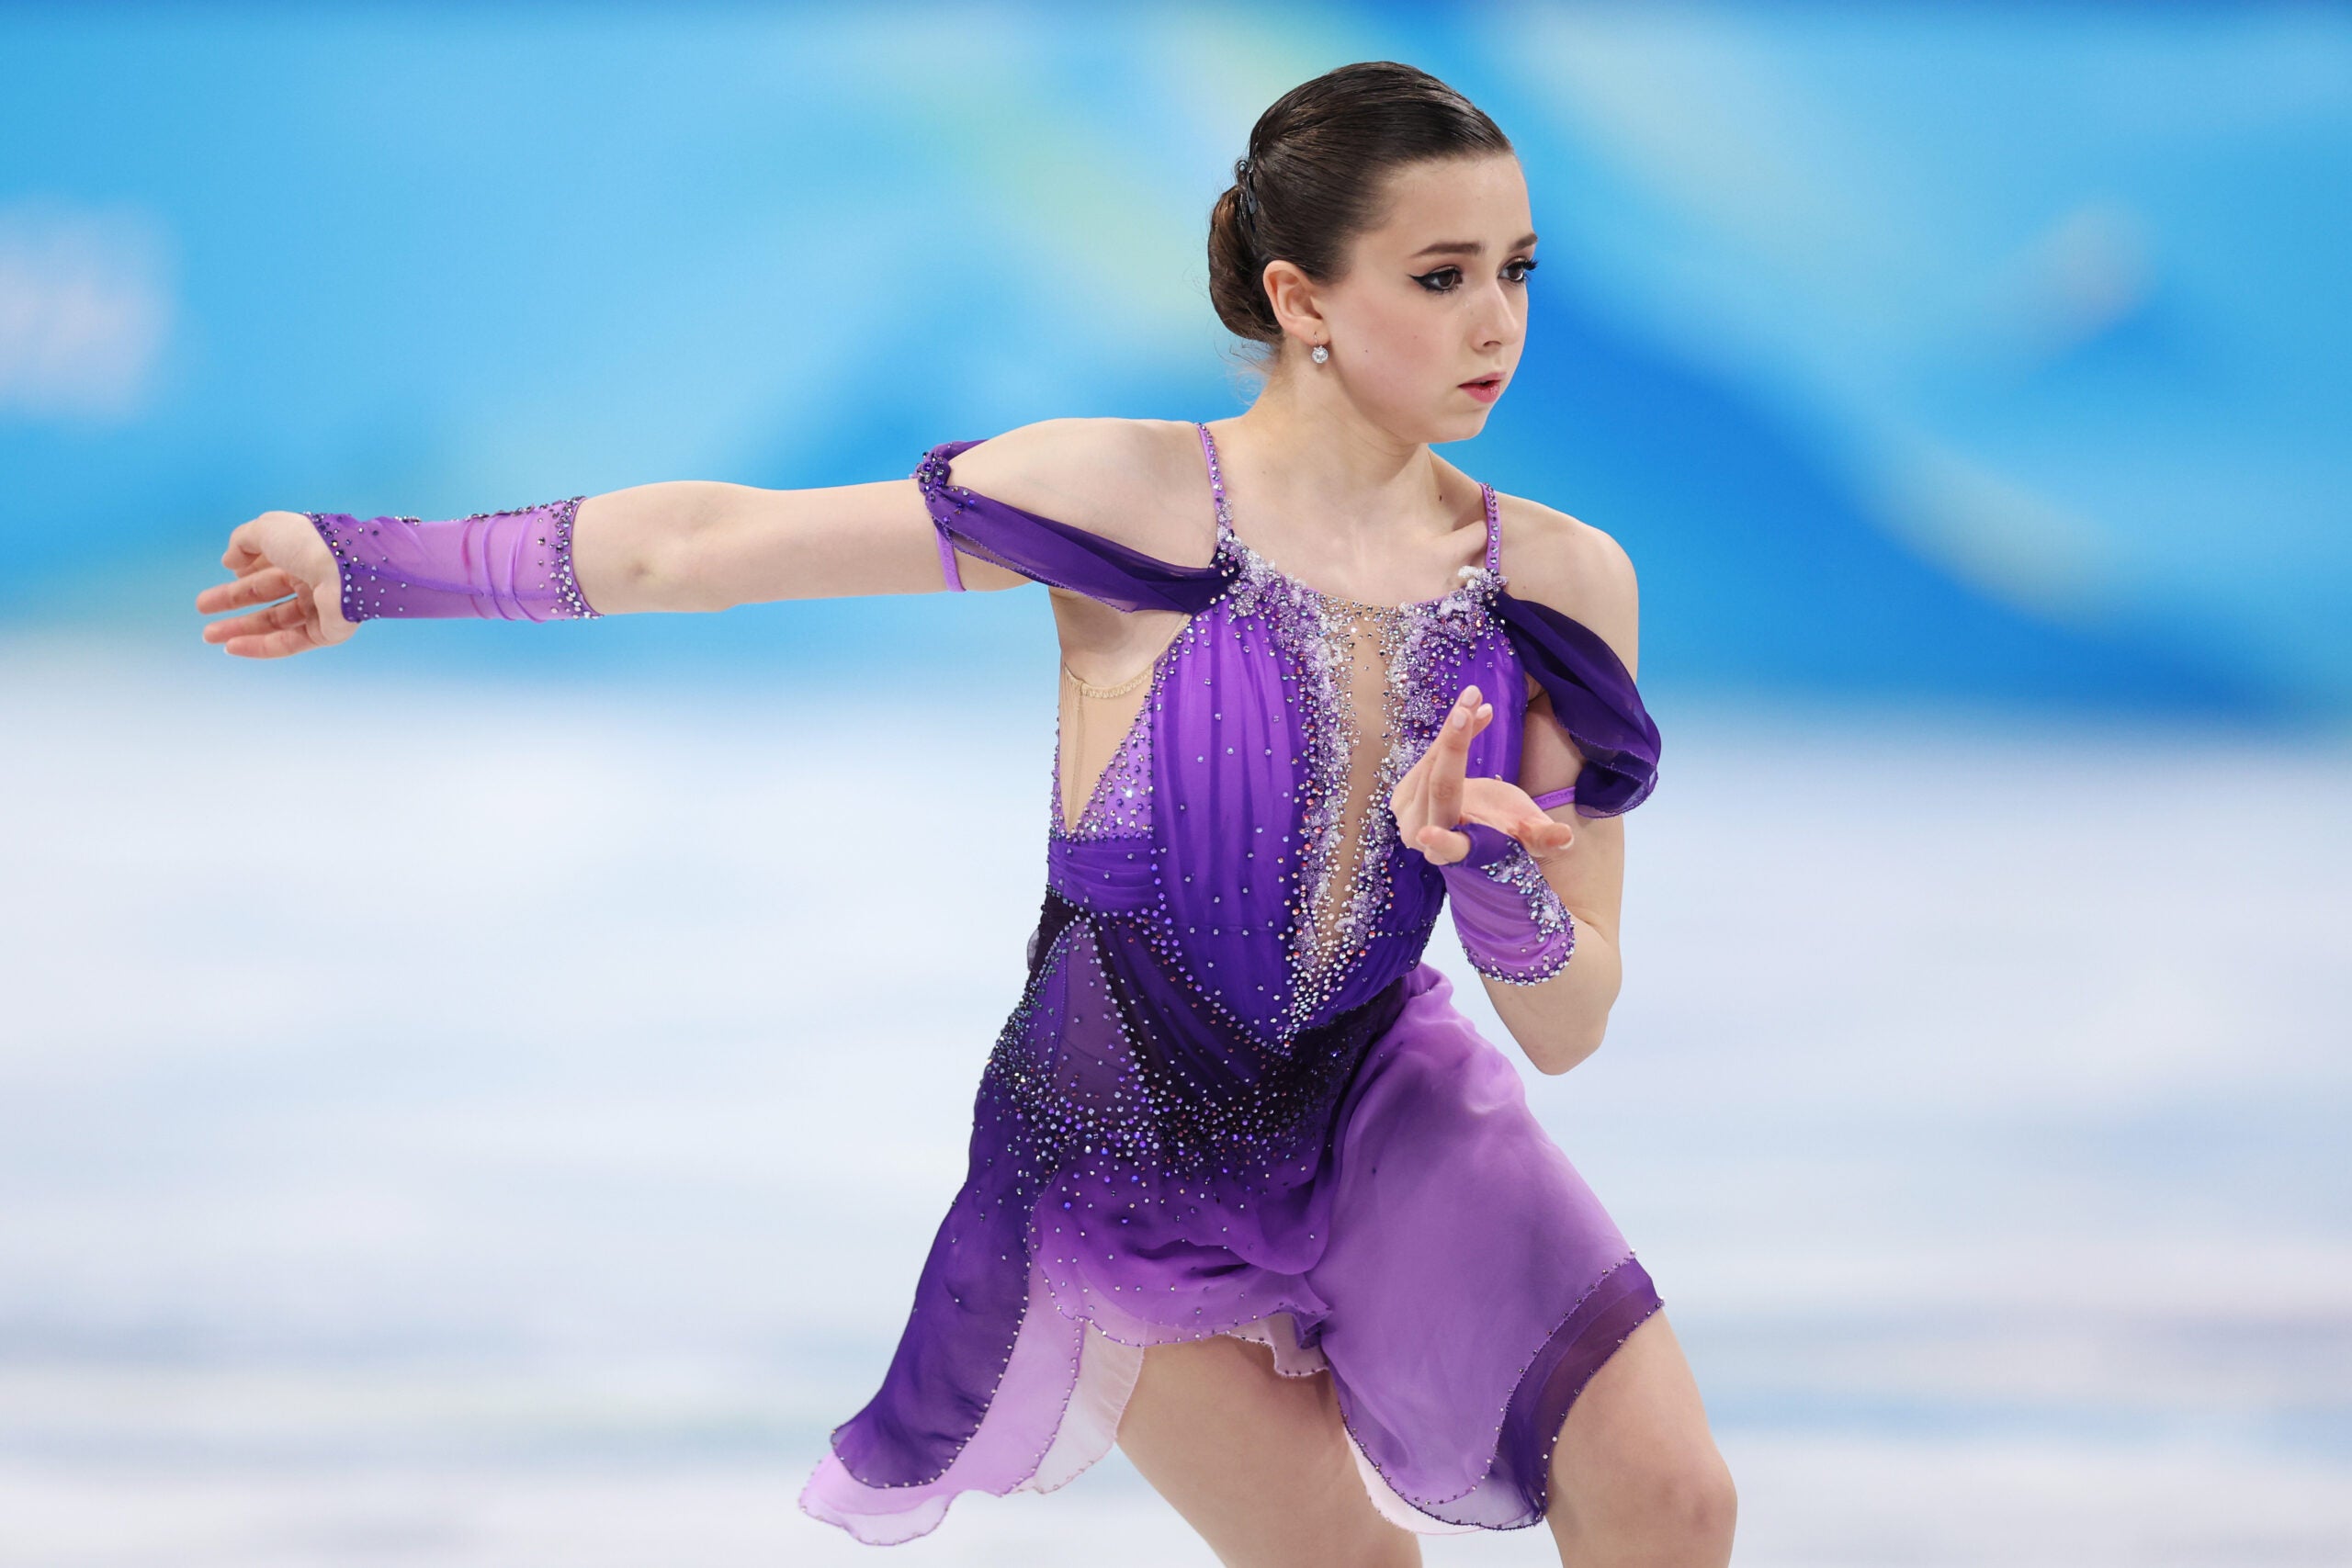 As Kamila Valieva skates, NBCs Johnny Weir and Tara Lipinski express their outrage